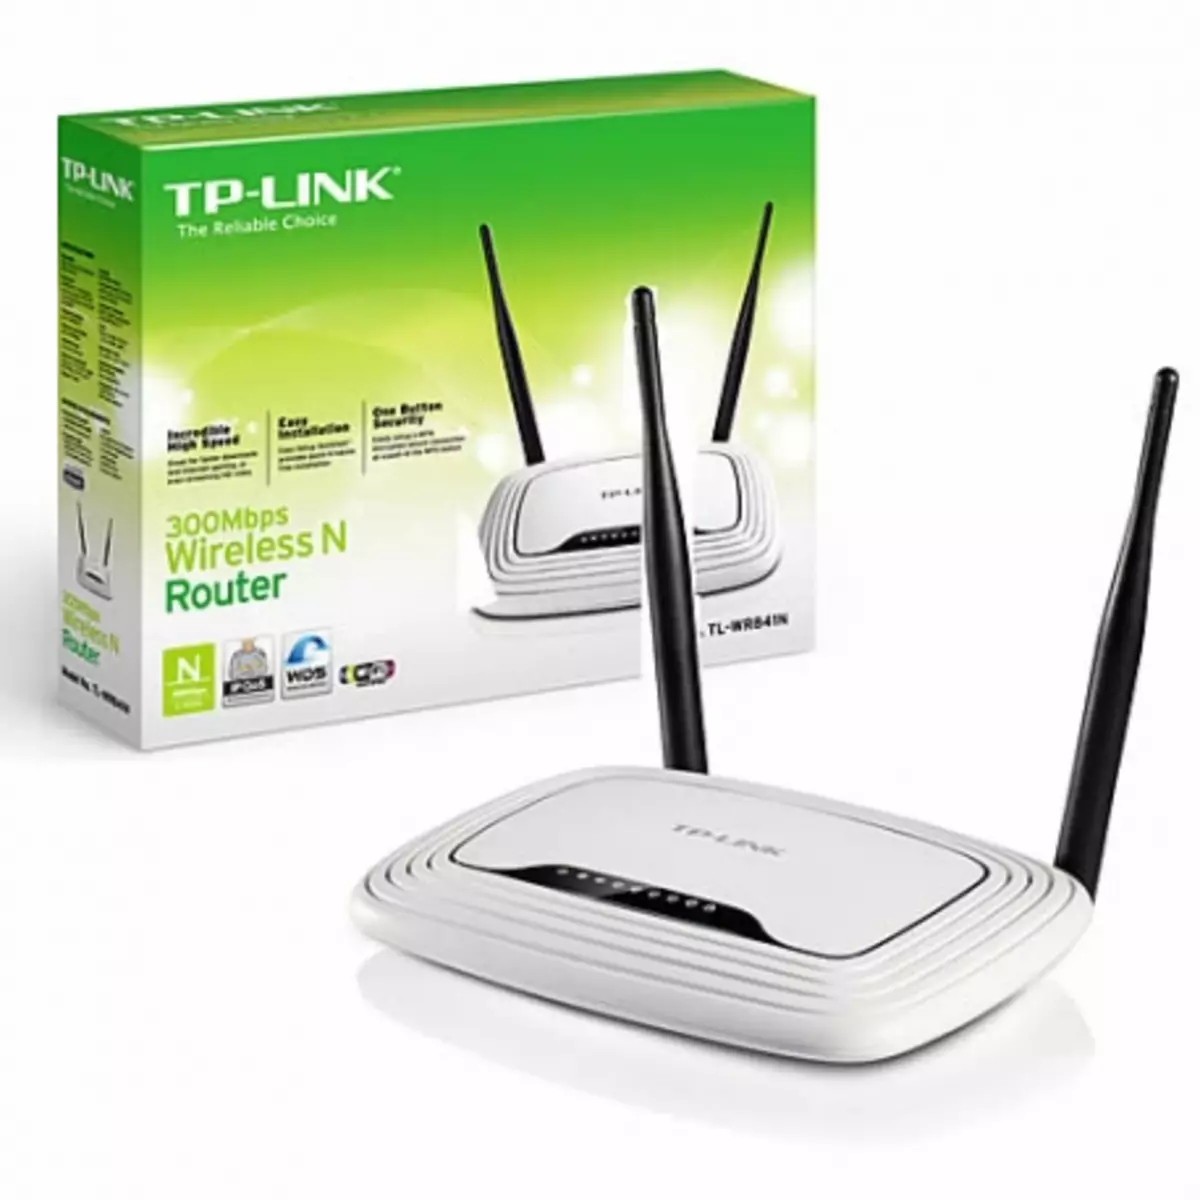 TP-LINK TL-WR841N Backup tetapan router sebelum firmware